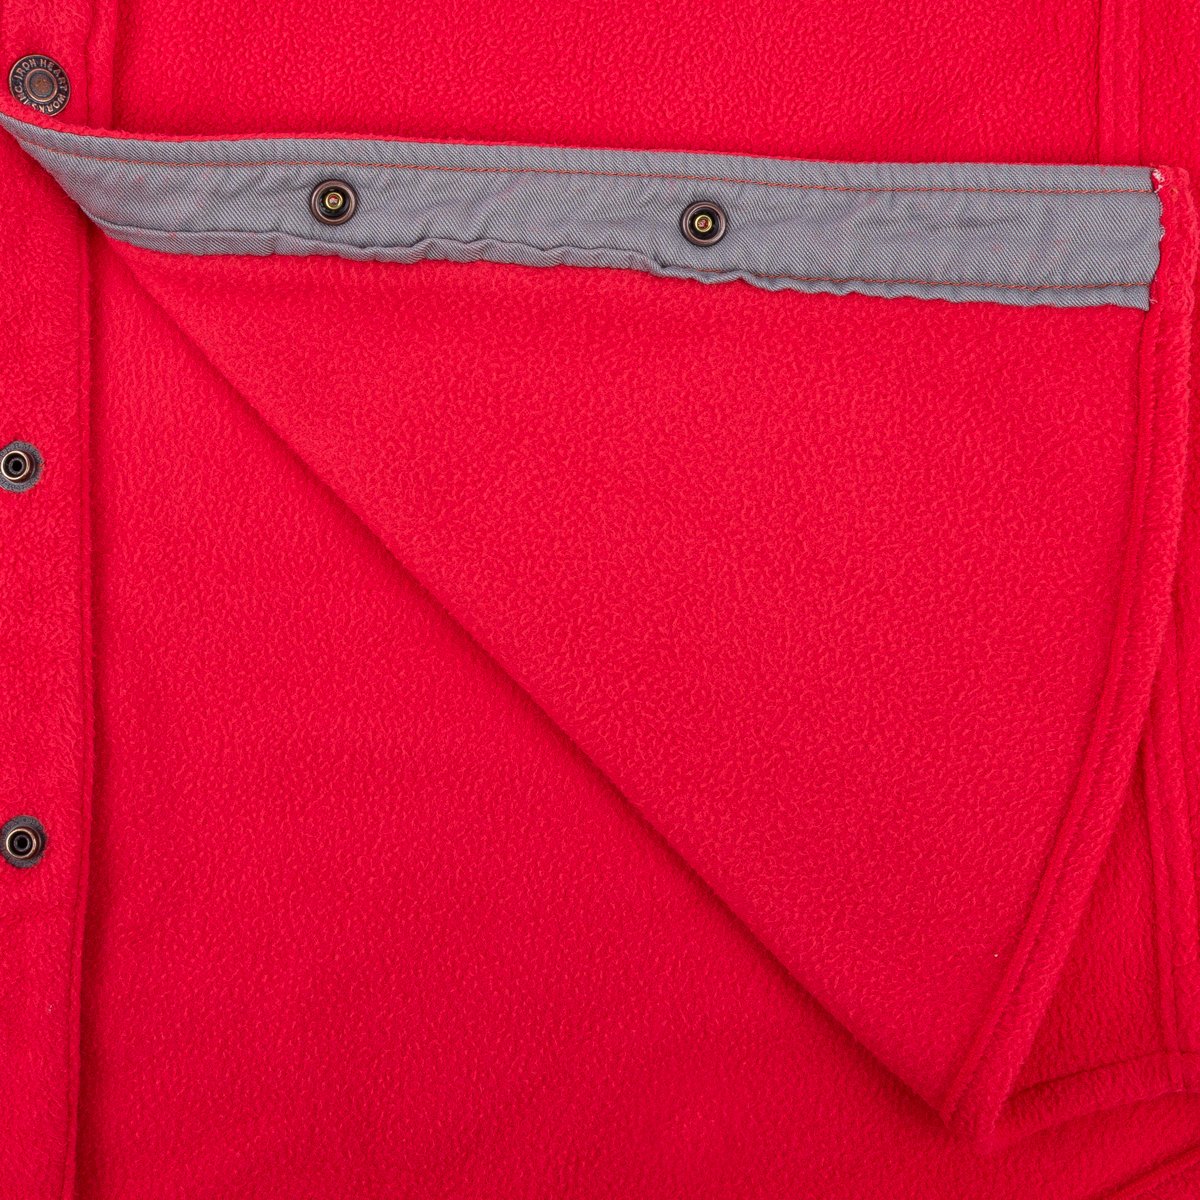 Iron Heart IHSH-287-RED Micro Fleece C.P.O Shirt - Red